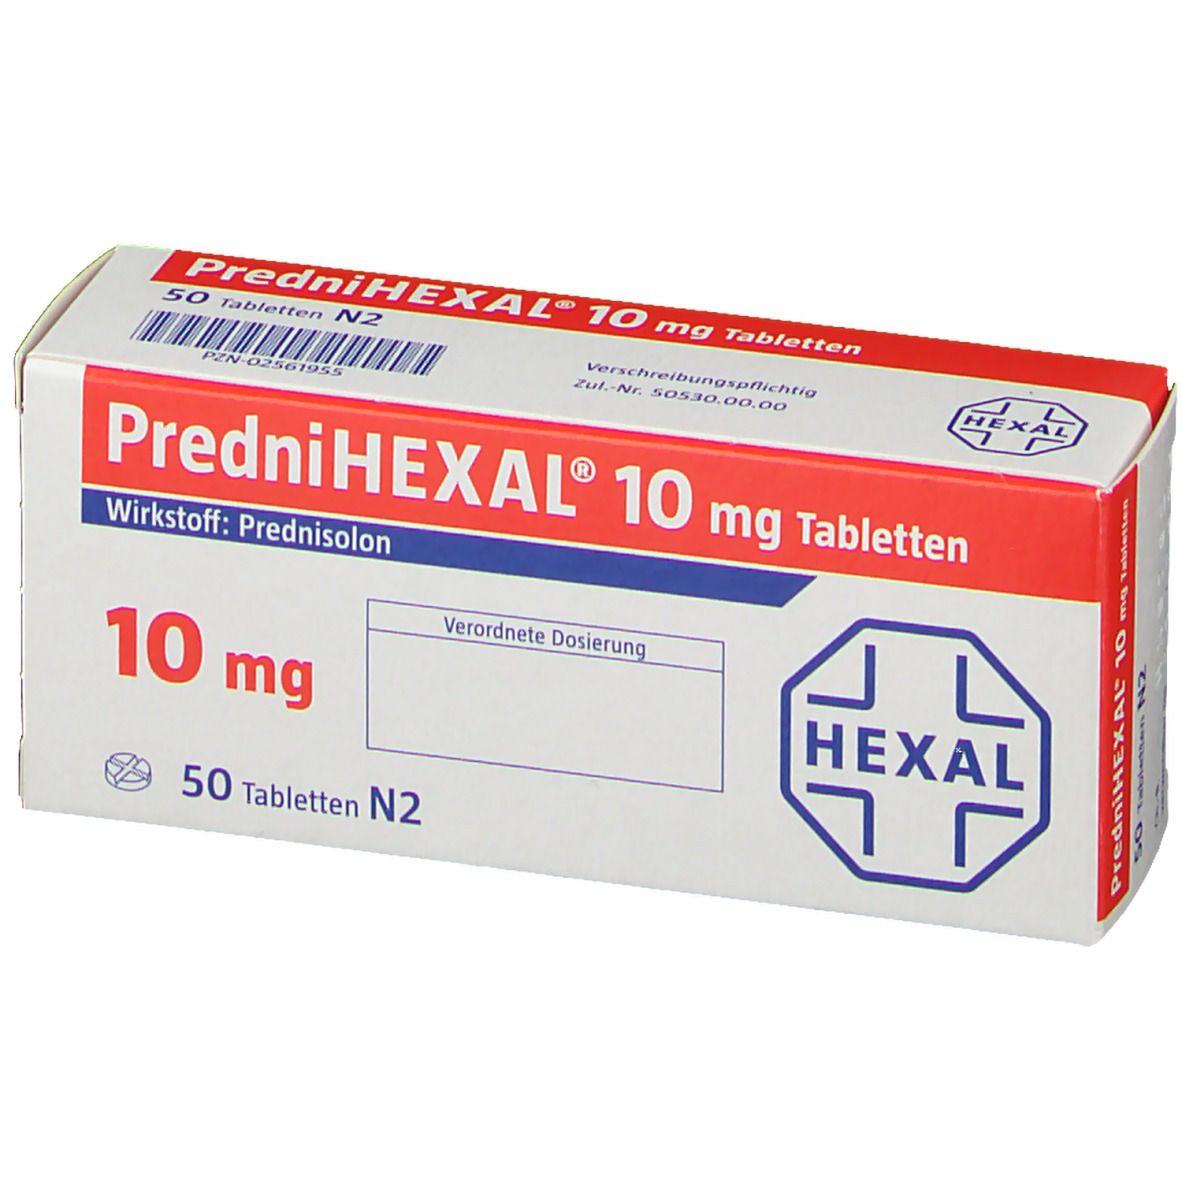 Prednihexal 10 mg Tabletten